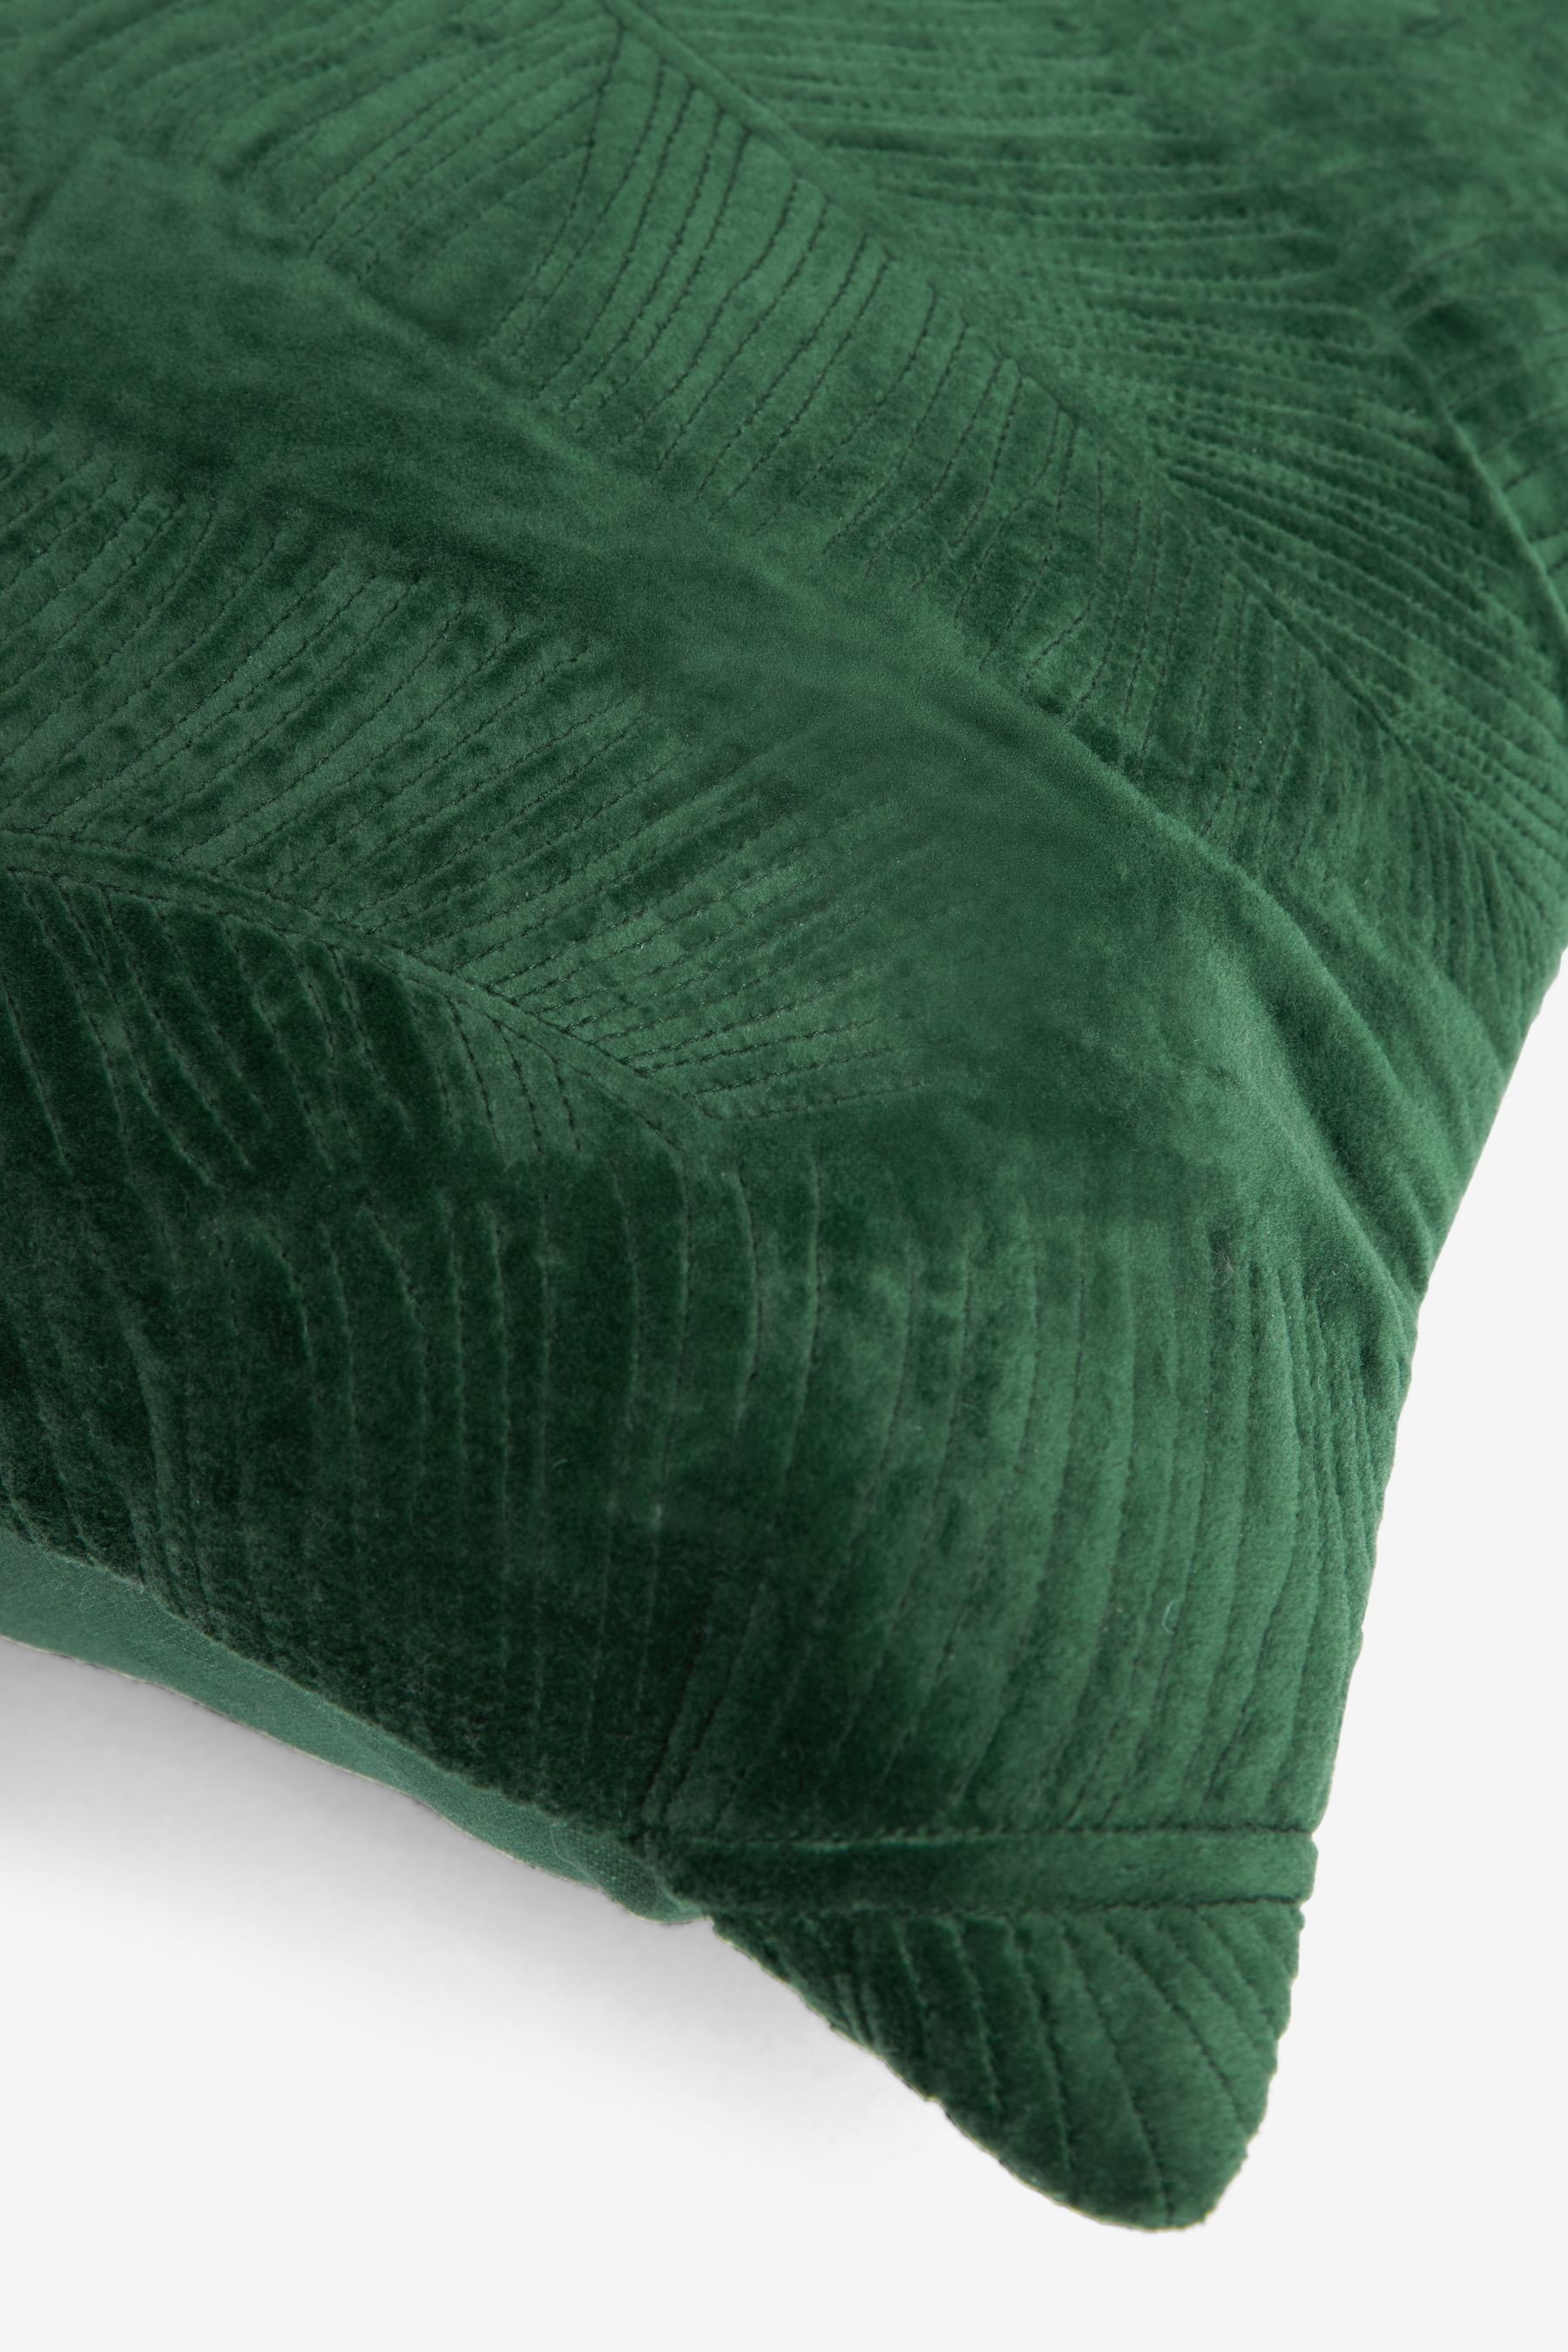 Textured Leaf Cushion